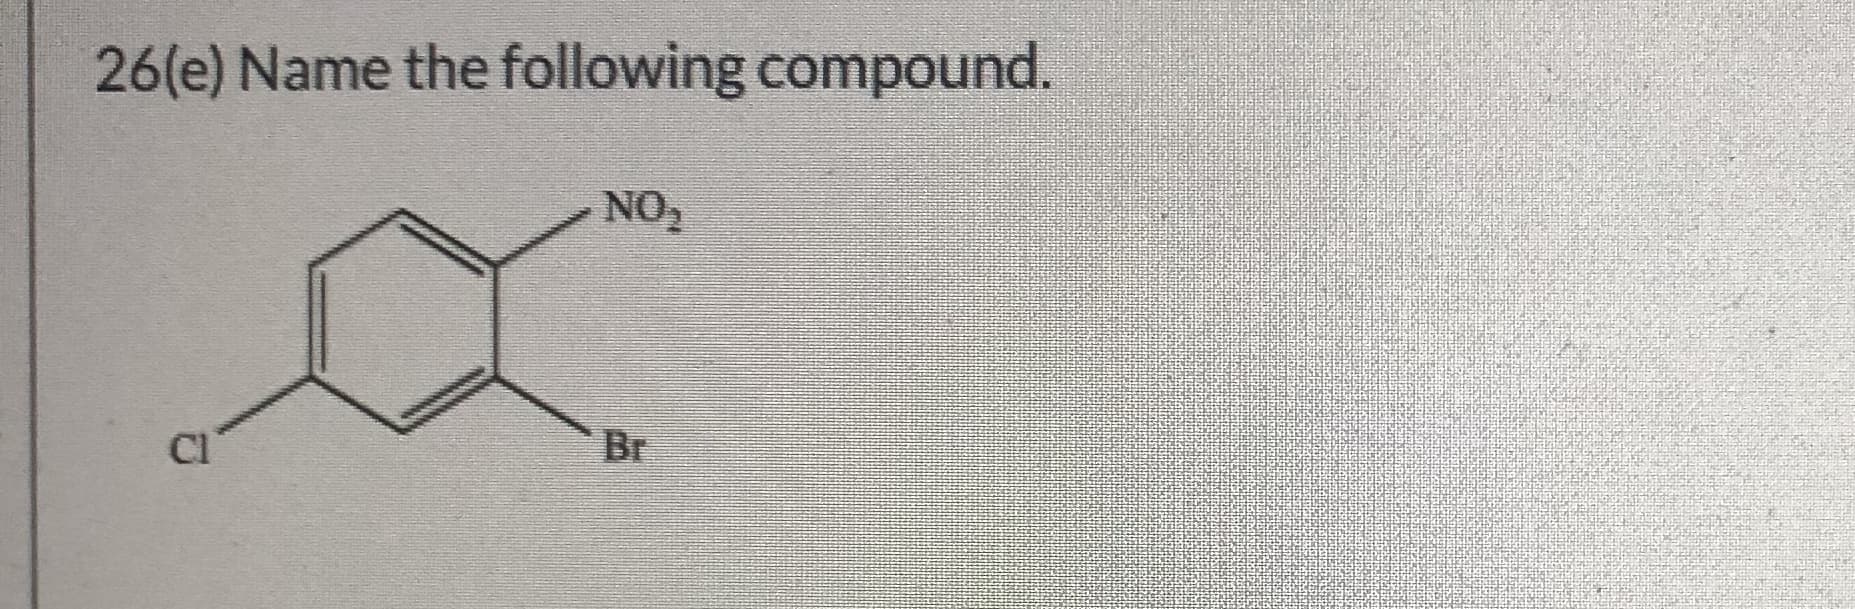 26(e) Name the following compound.
NO2
CI
Br
